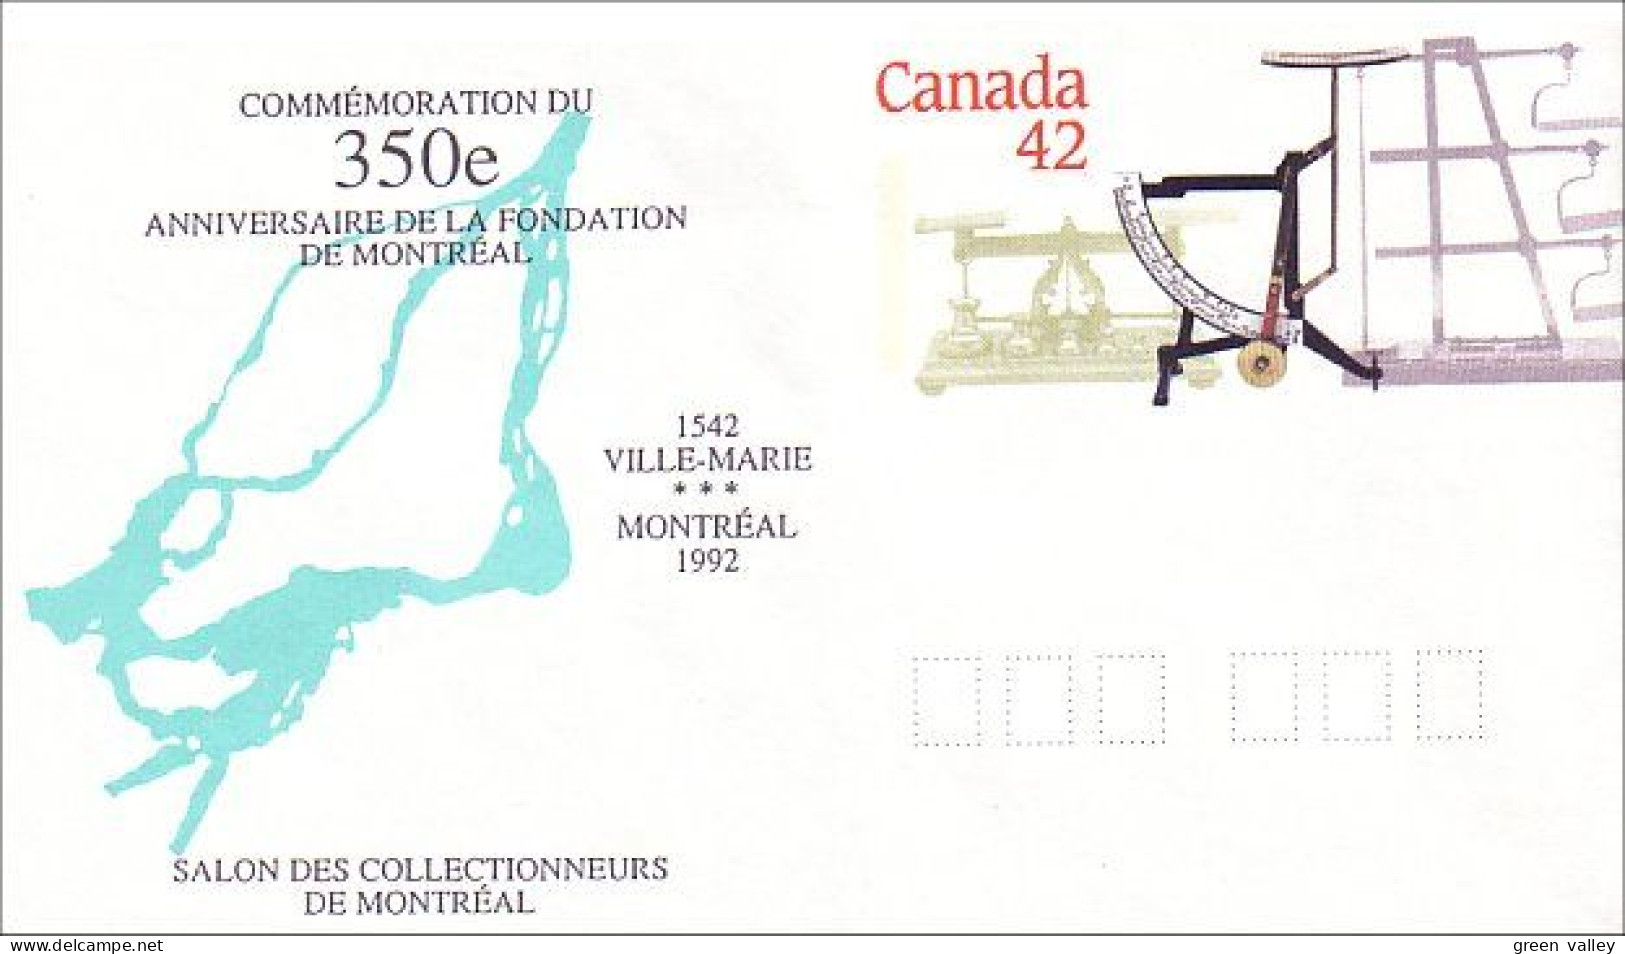 Canada Montreal 350e Enveloppe Pre-imprimee Balance Scale 42c ( A71 545a) - Enveloppes Commémoratives